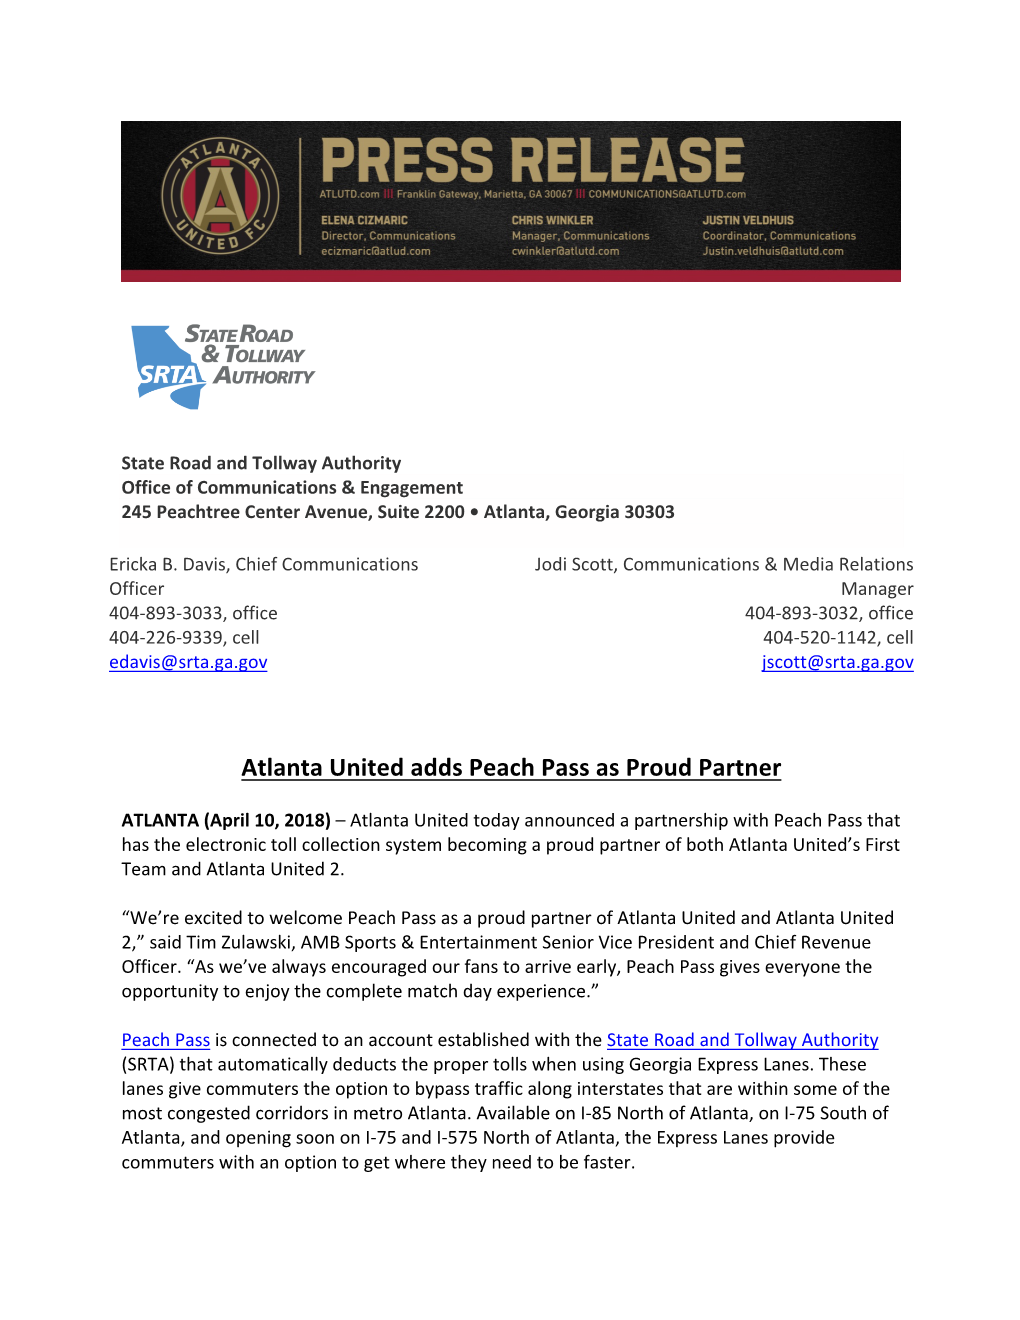 Atlanta United Adds Peach Pass As Proud Partner